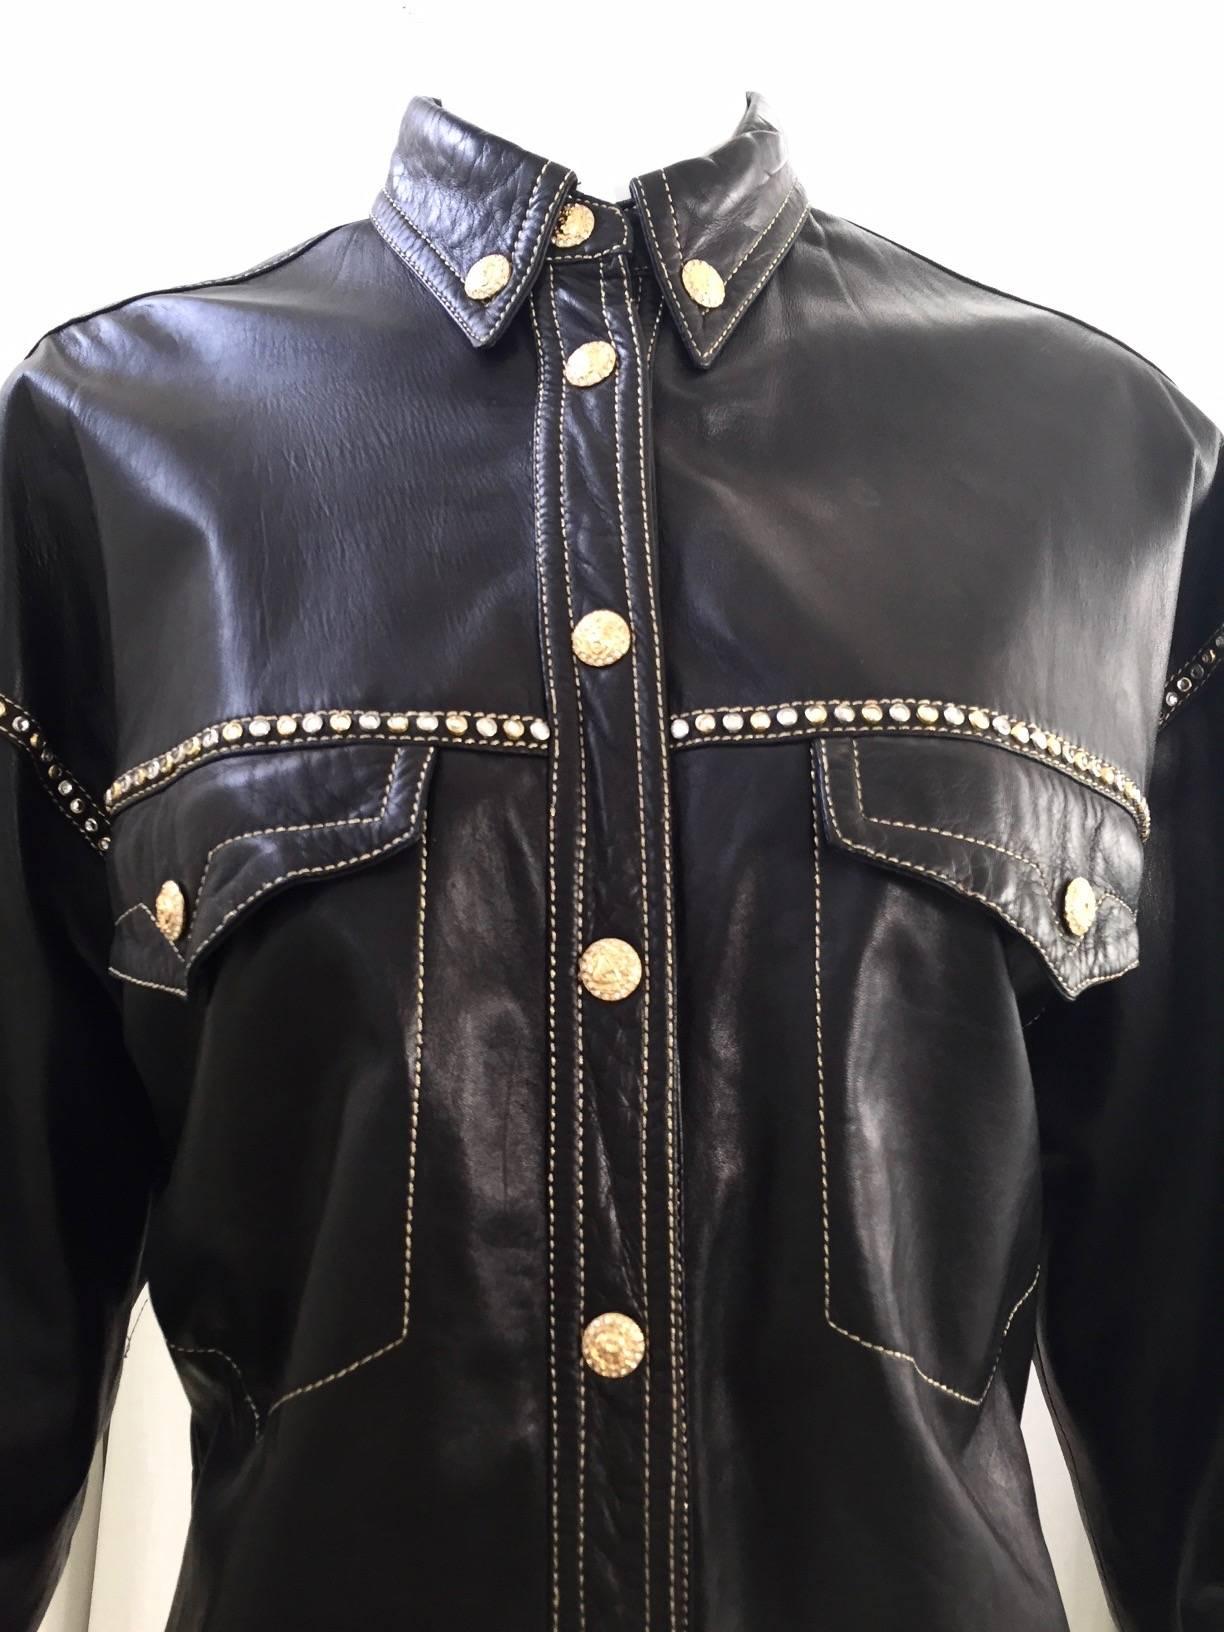 90s Gianni Versace soft black leather western shirt.
Bust: 36
Waist: 30